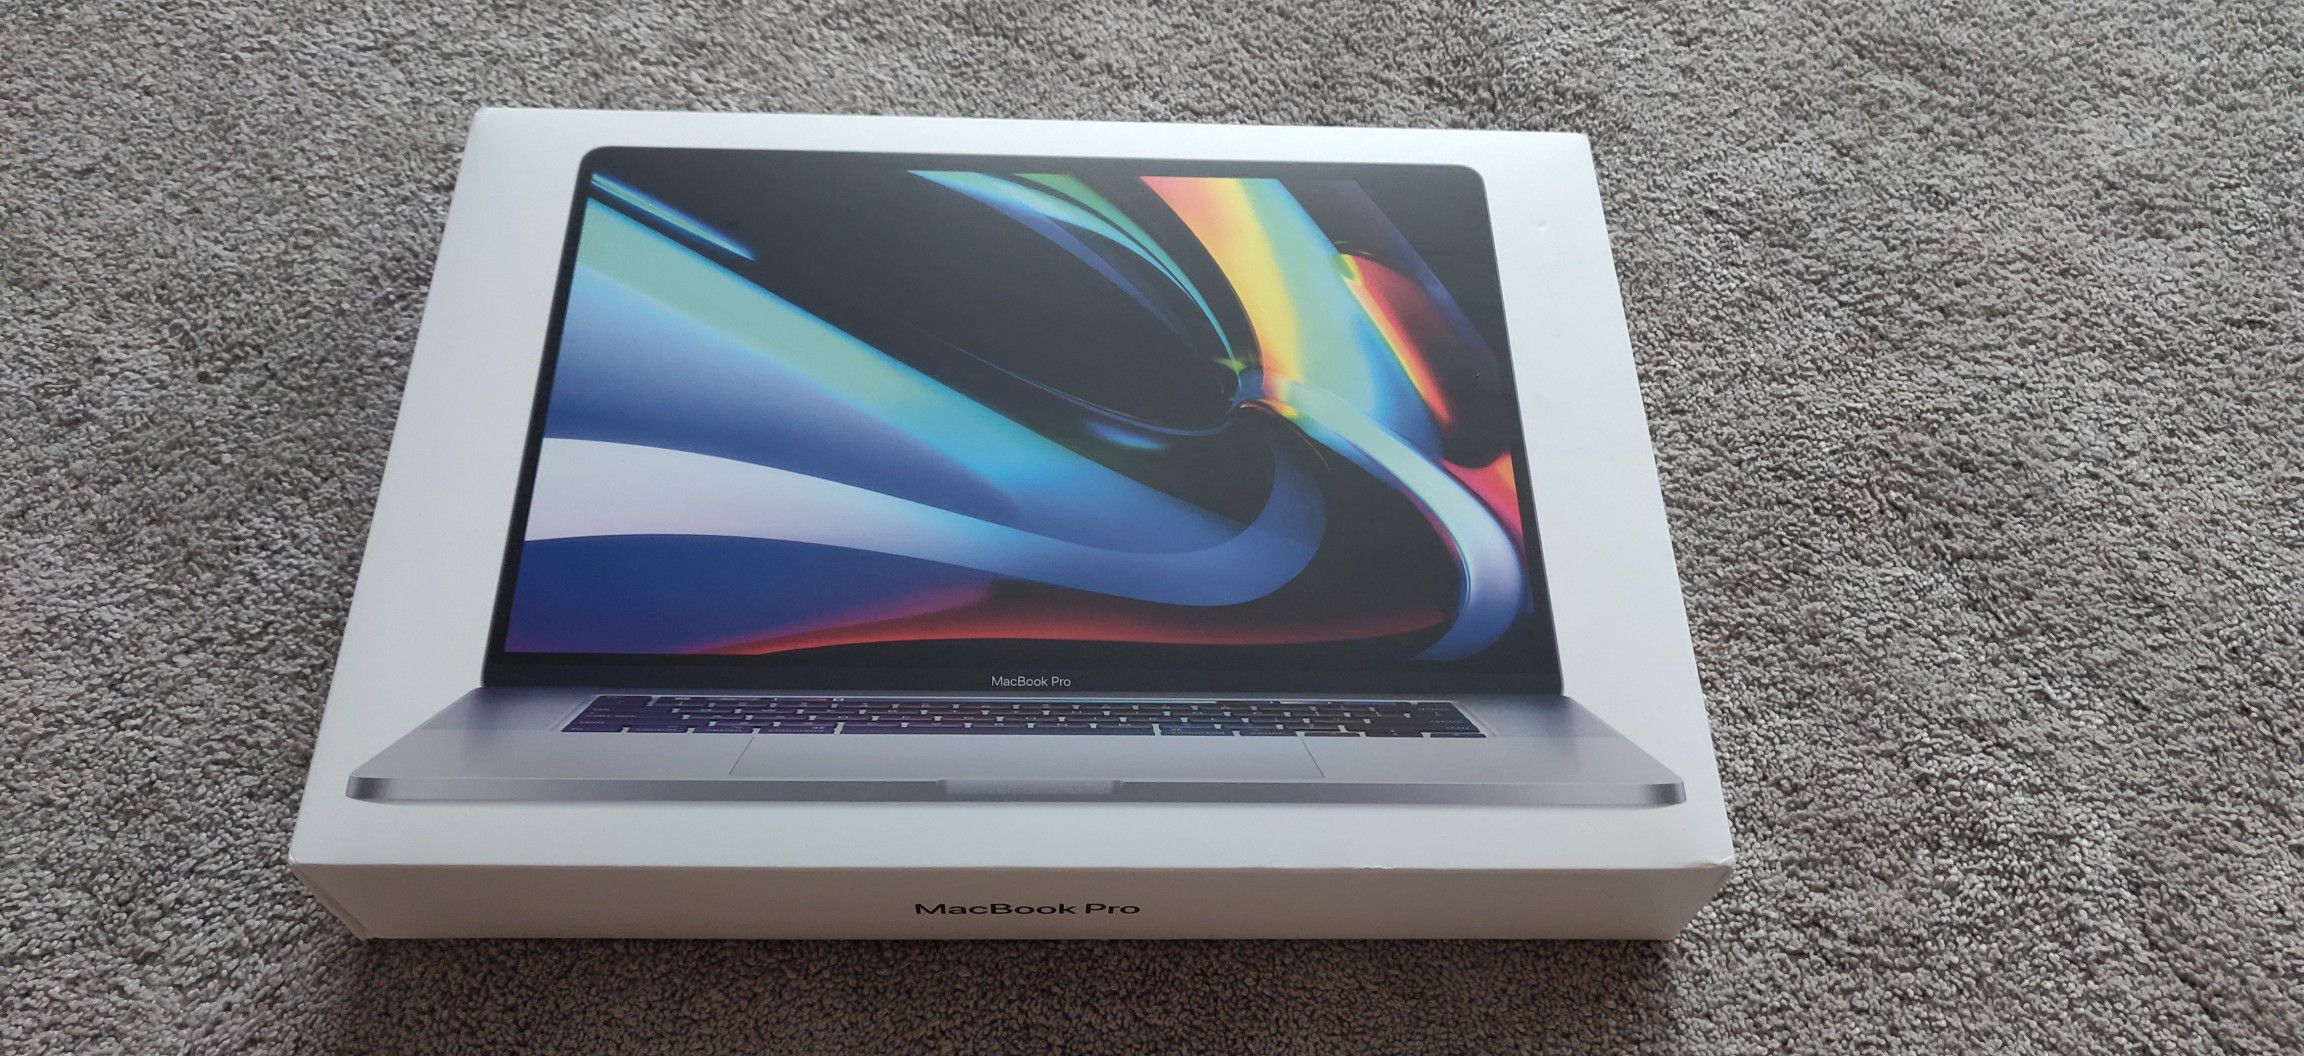 Apple MacBook pro 16 inch i7 512GB open box brand new